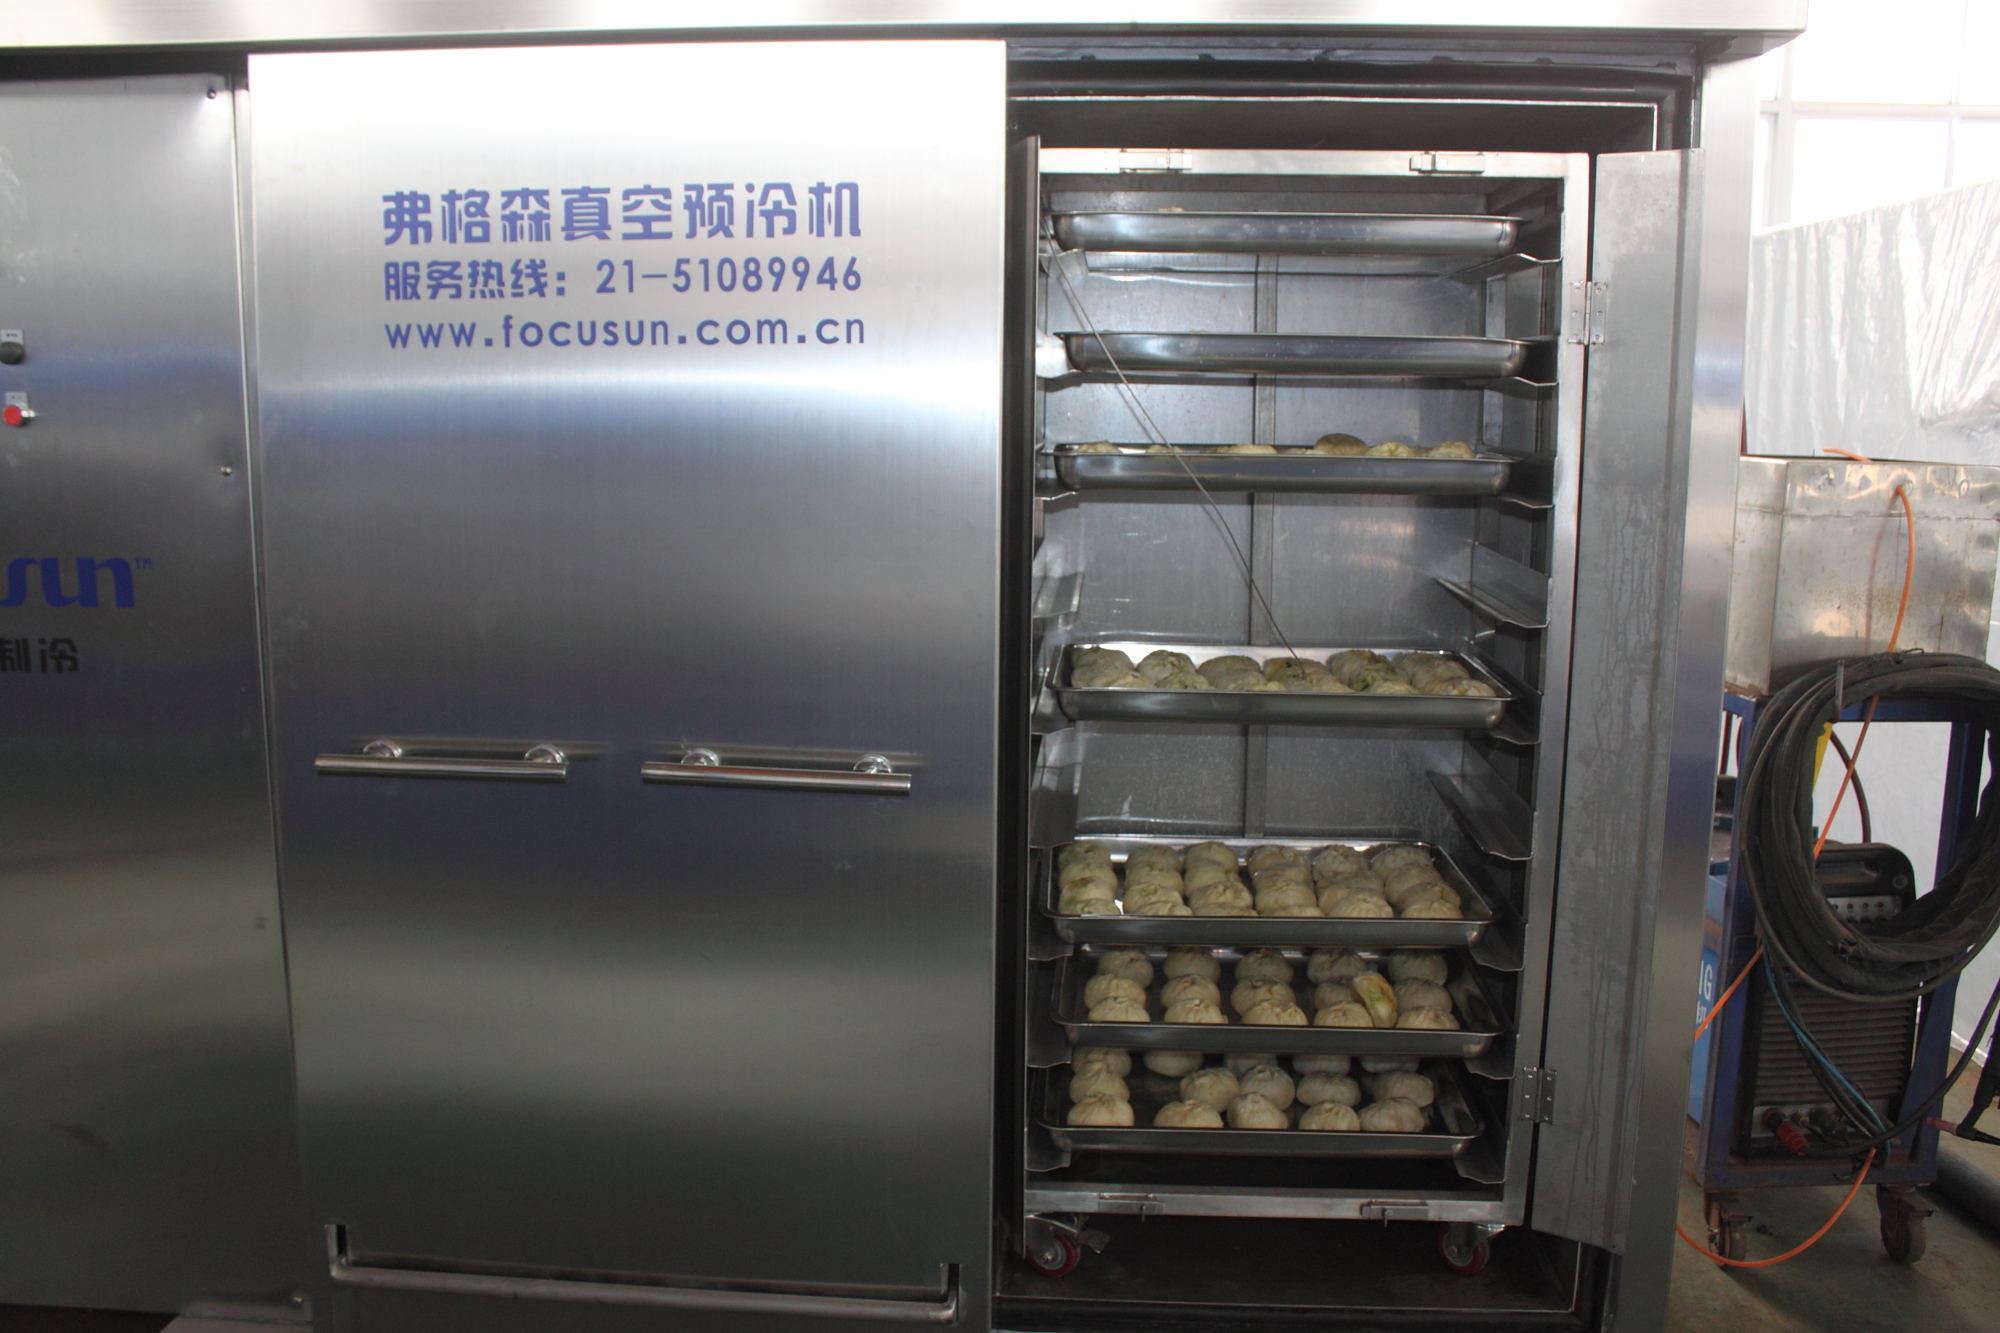 Hoshizaki Introduces First Sphere Ice Machine To U.S. Market